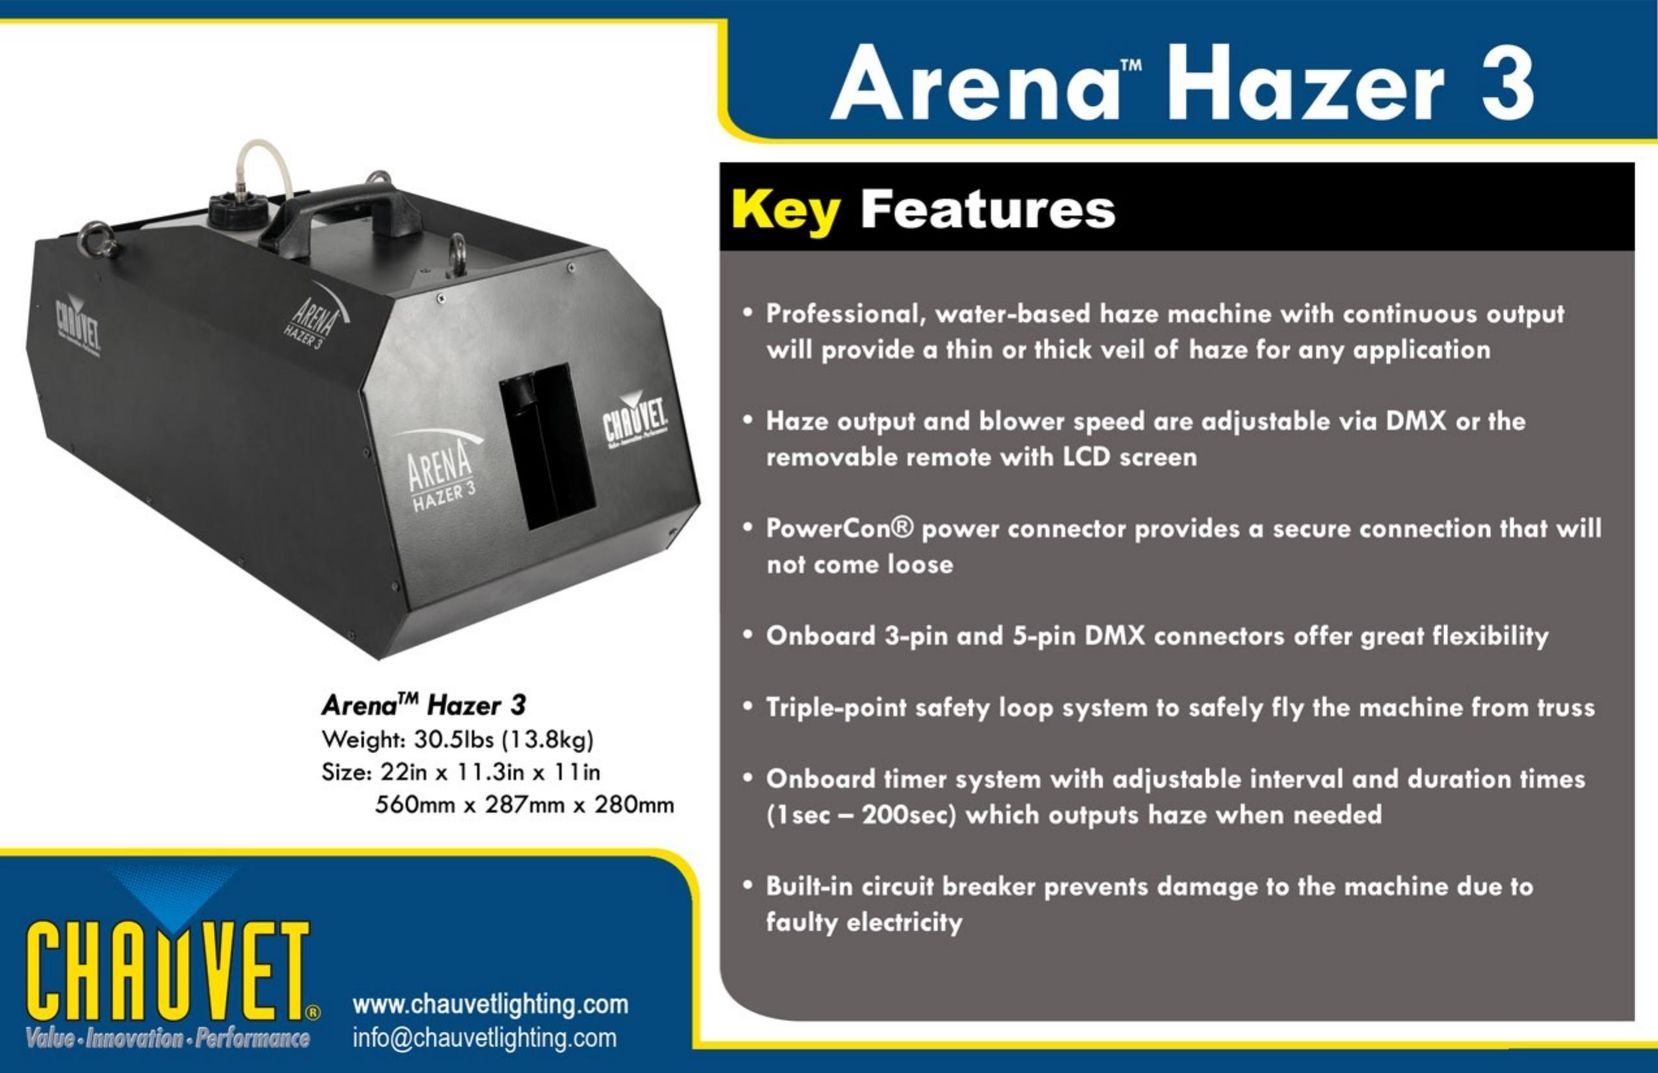 Chauvet Arena Hazer 3 Work Light User Manual